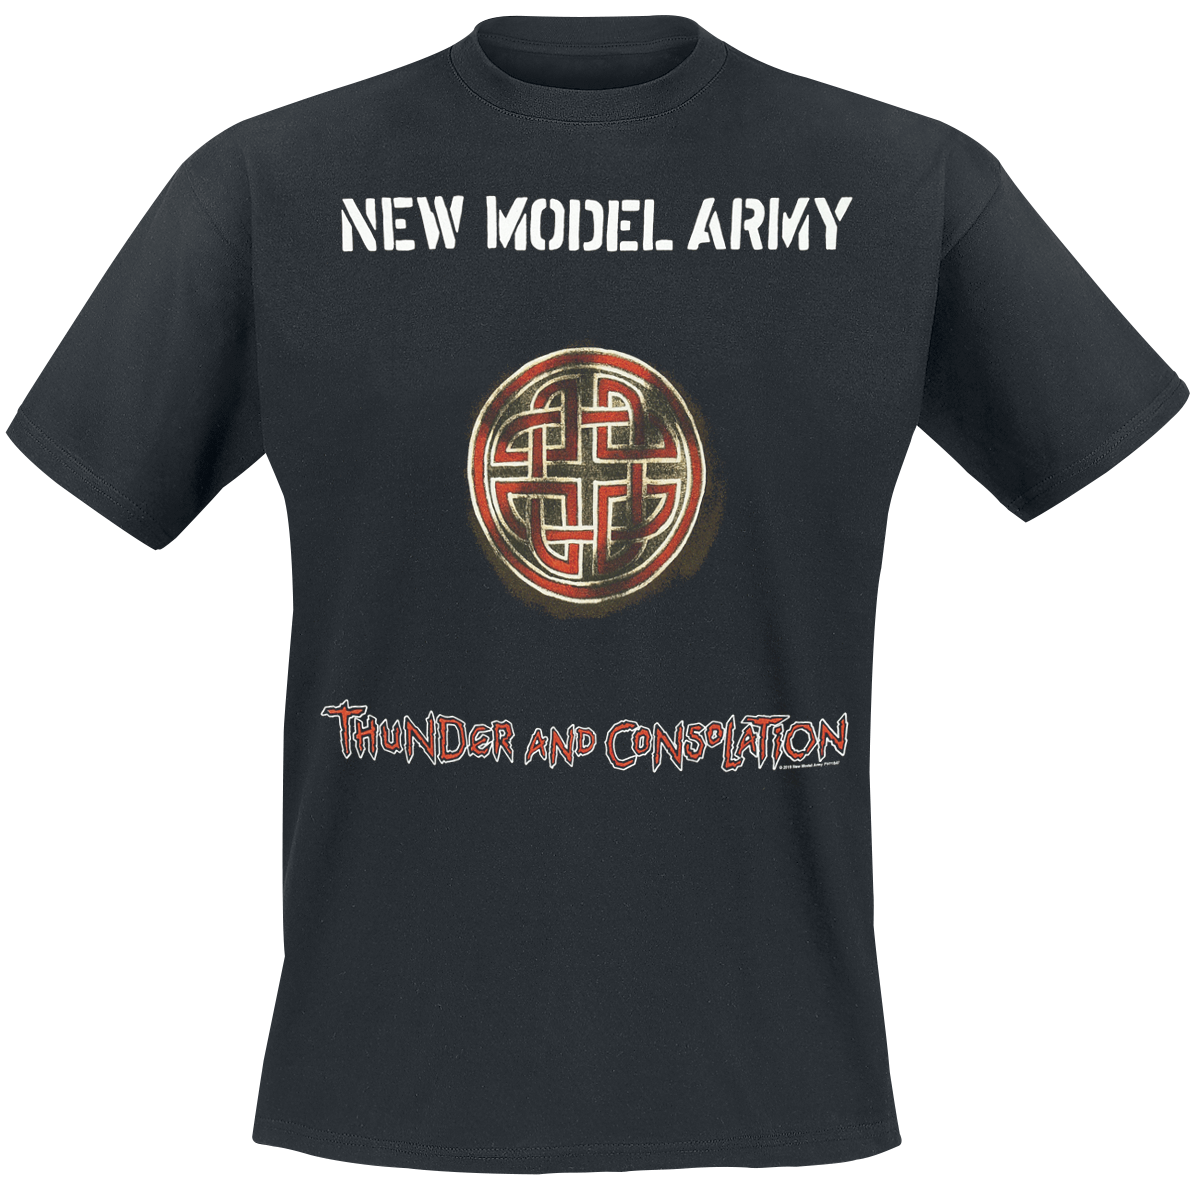 New Model Army - Thunder And Consolation - T-Shirt - black image